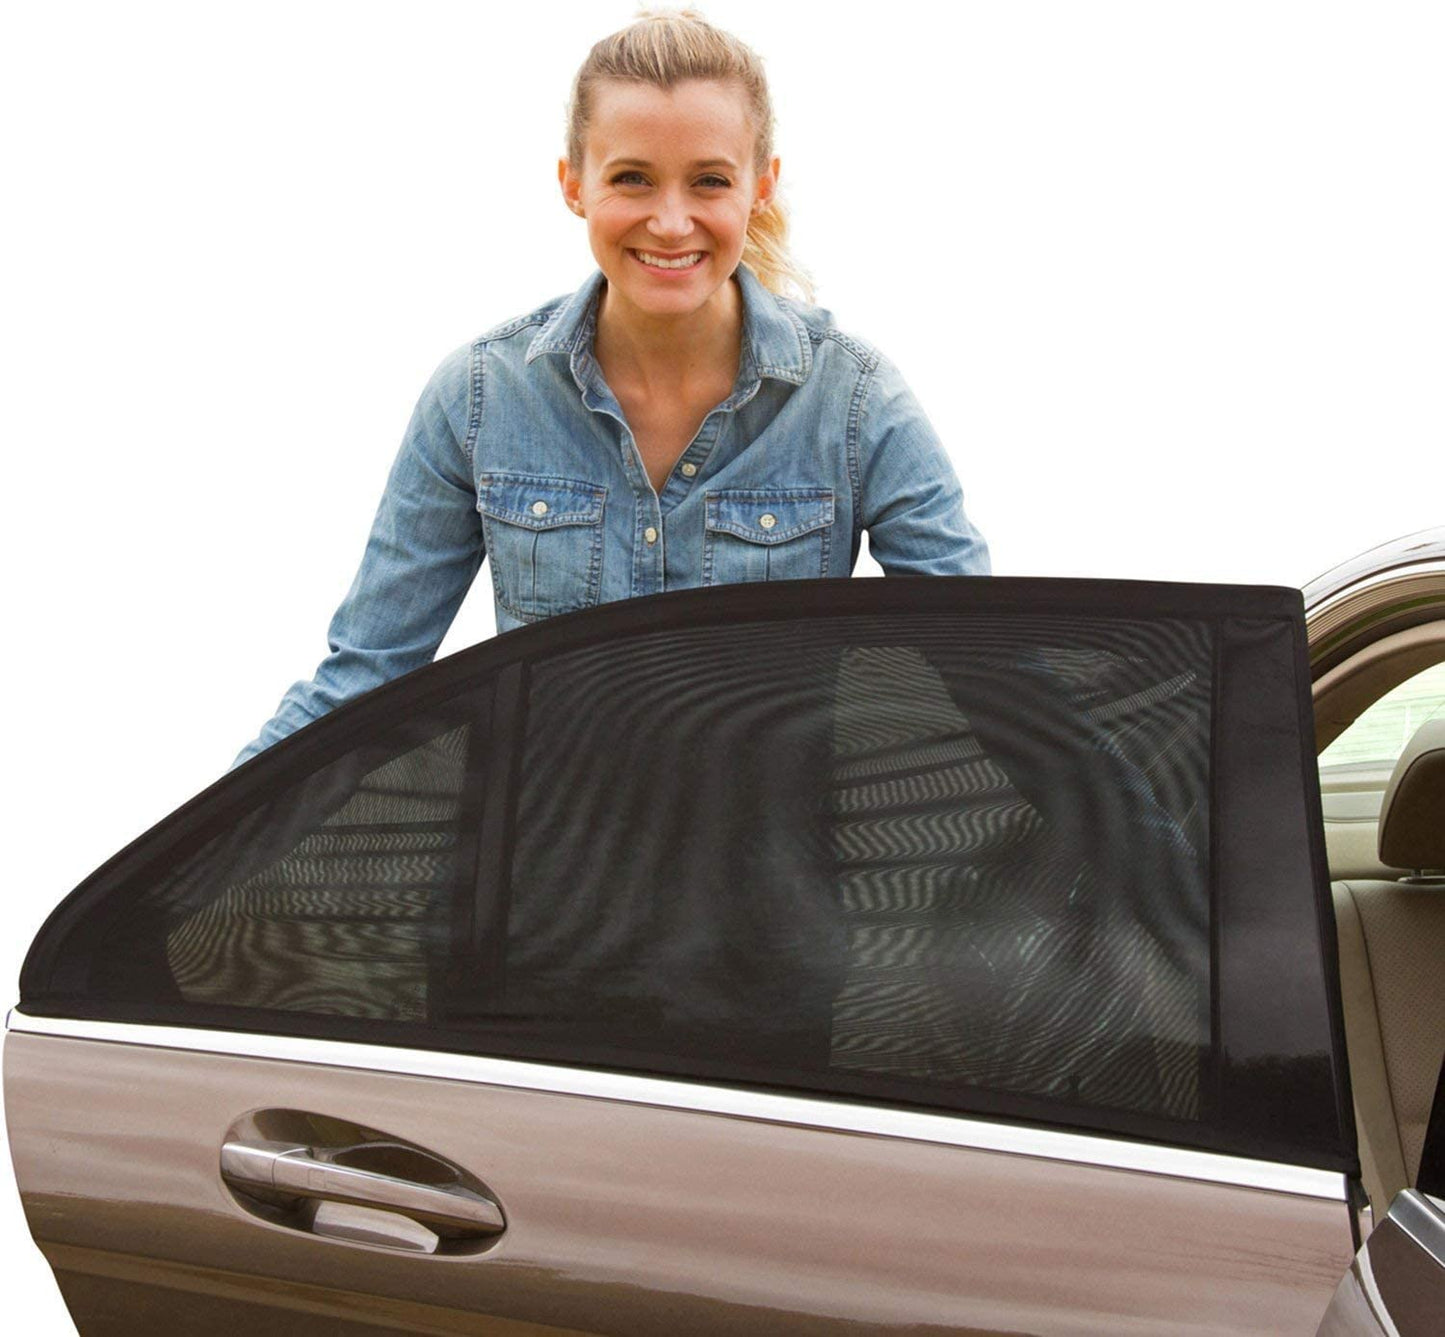 ShadeSox -  Universal Fit Car Side Window Sun Shade (2-PACK)